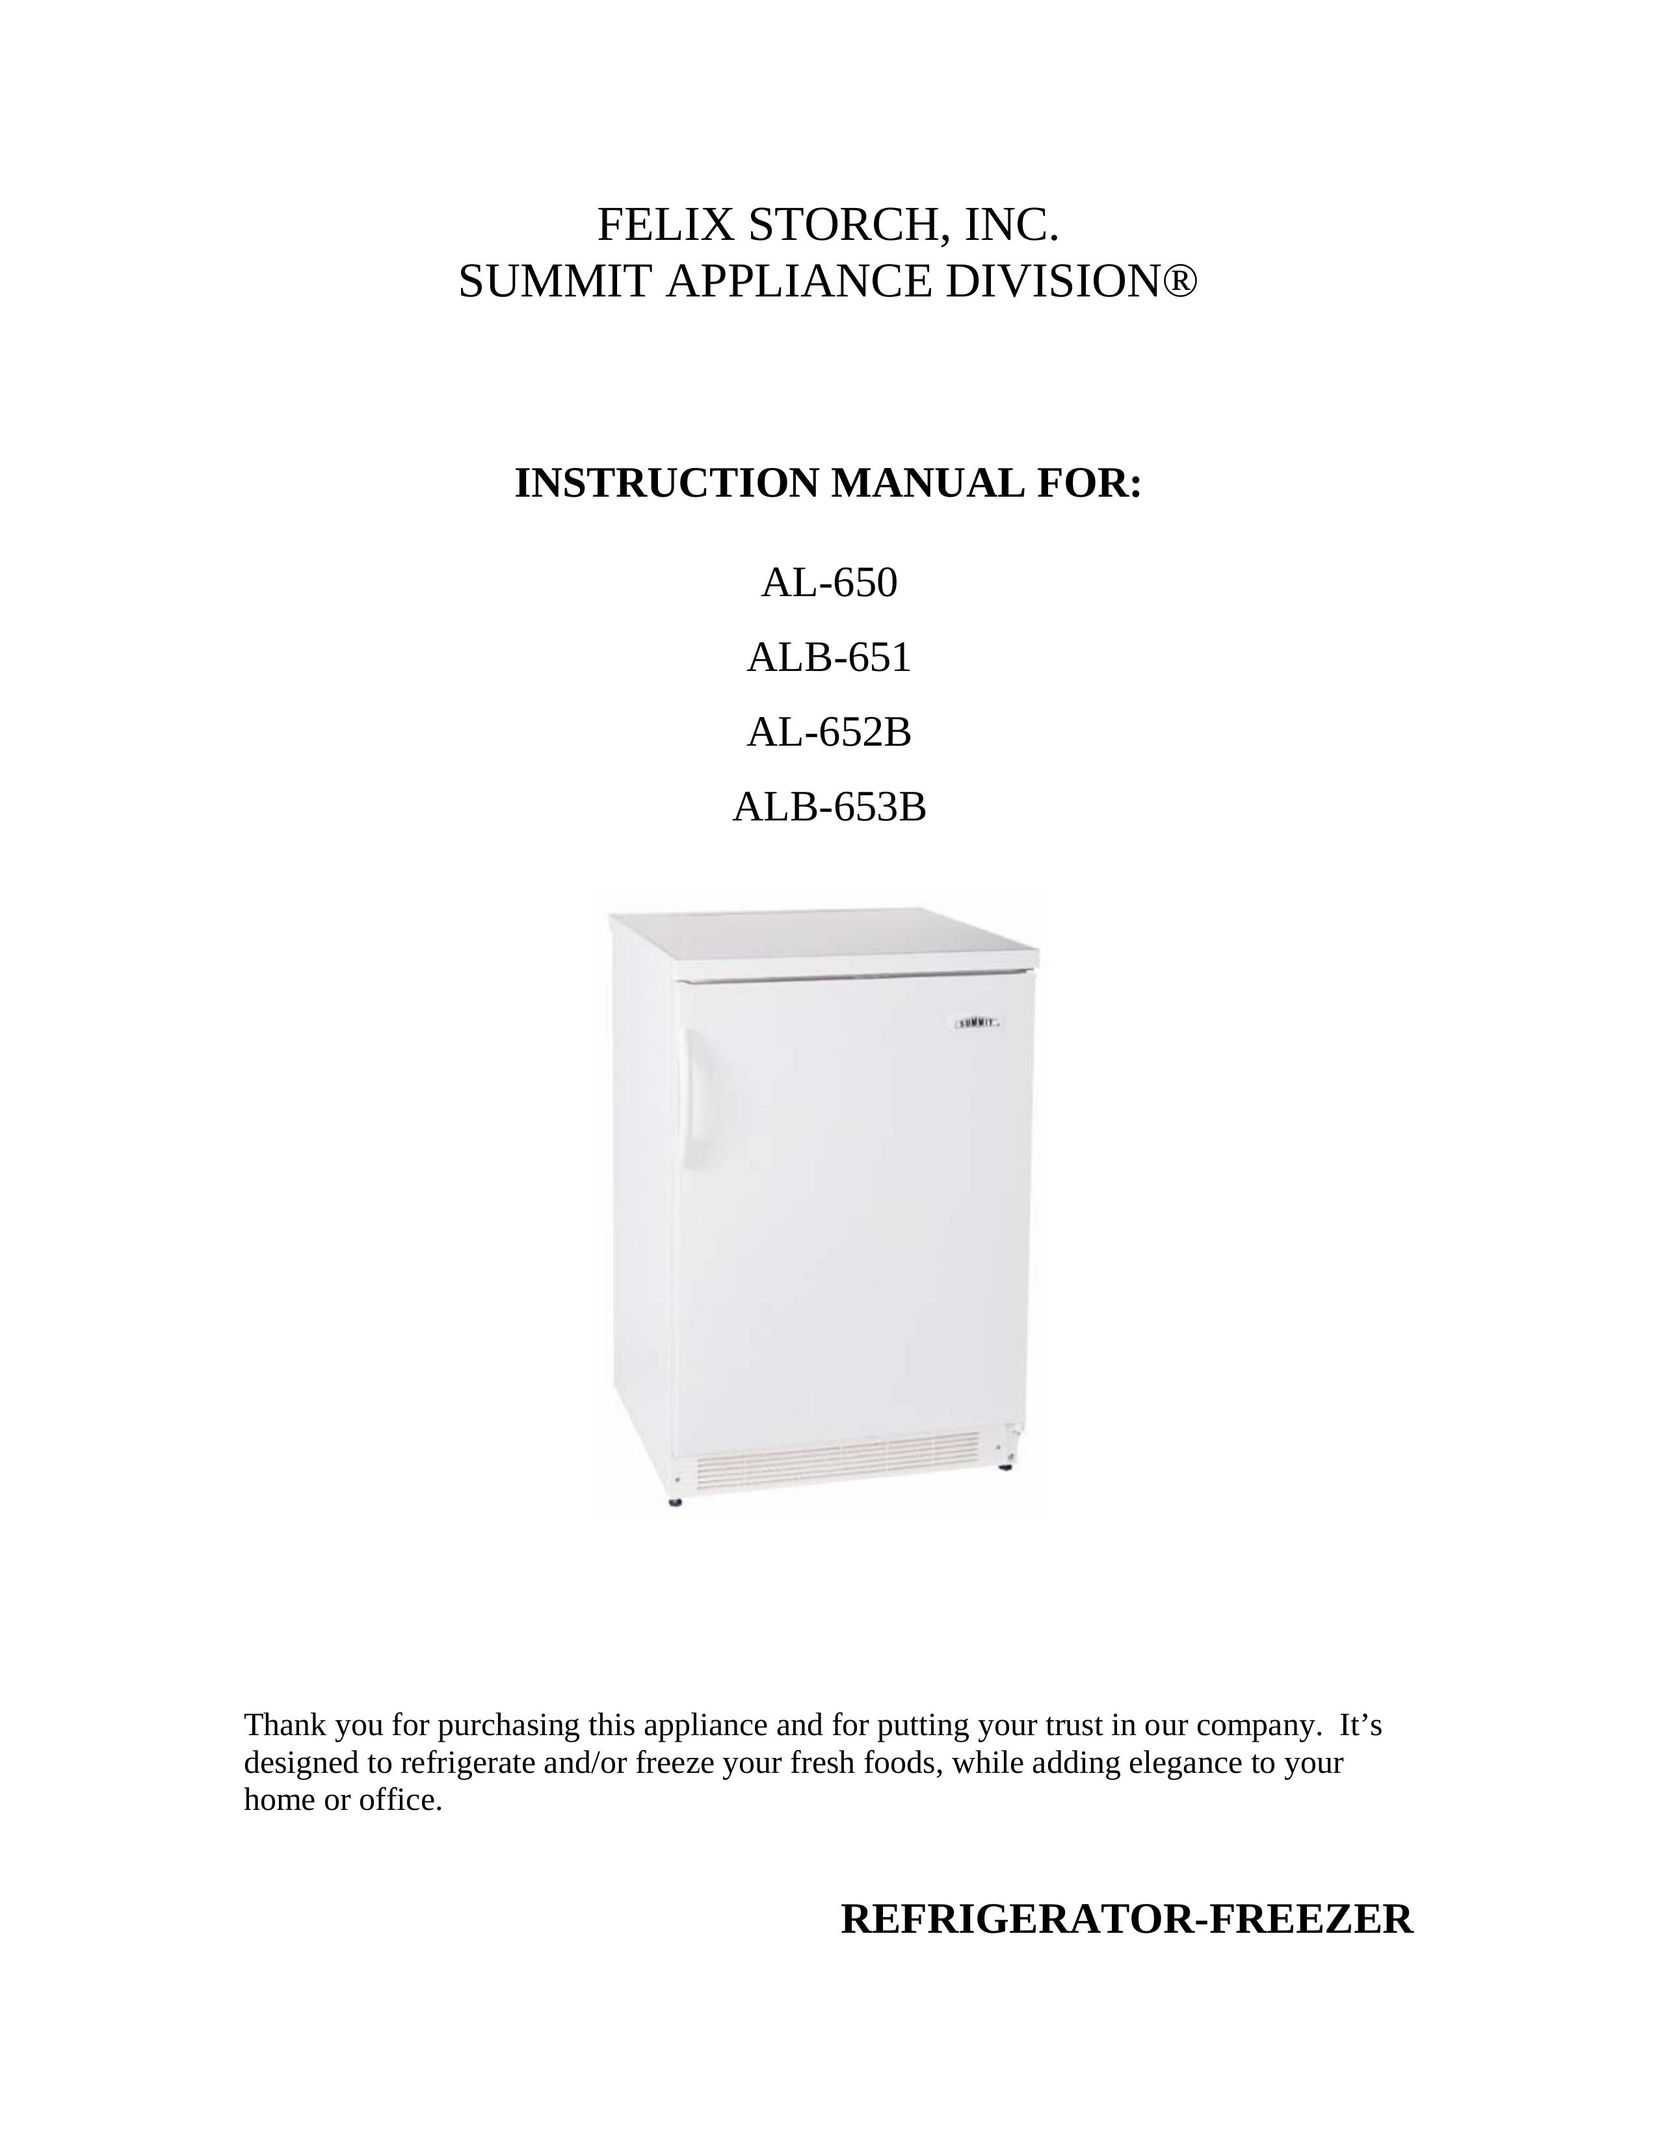 Summit ALB-653B Freezer User Manual